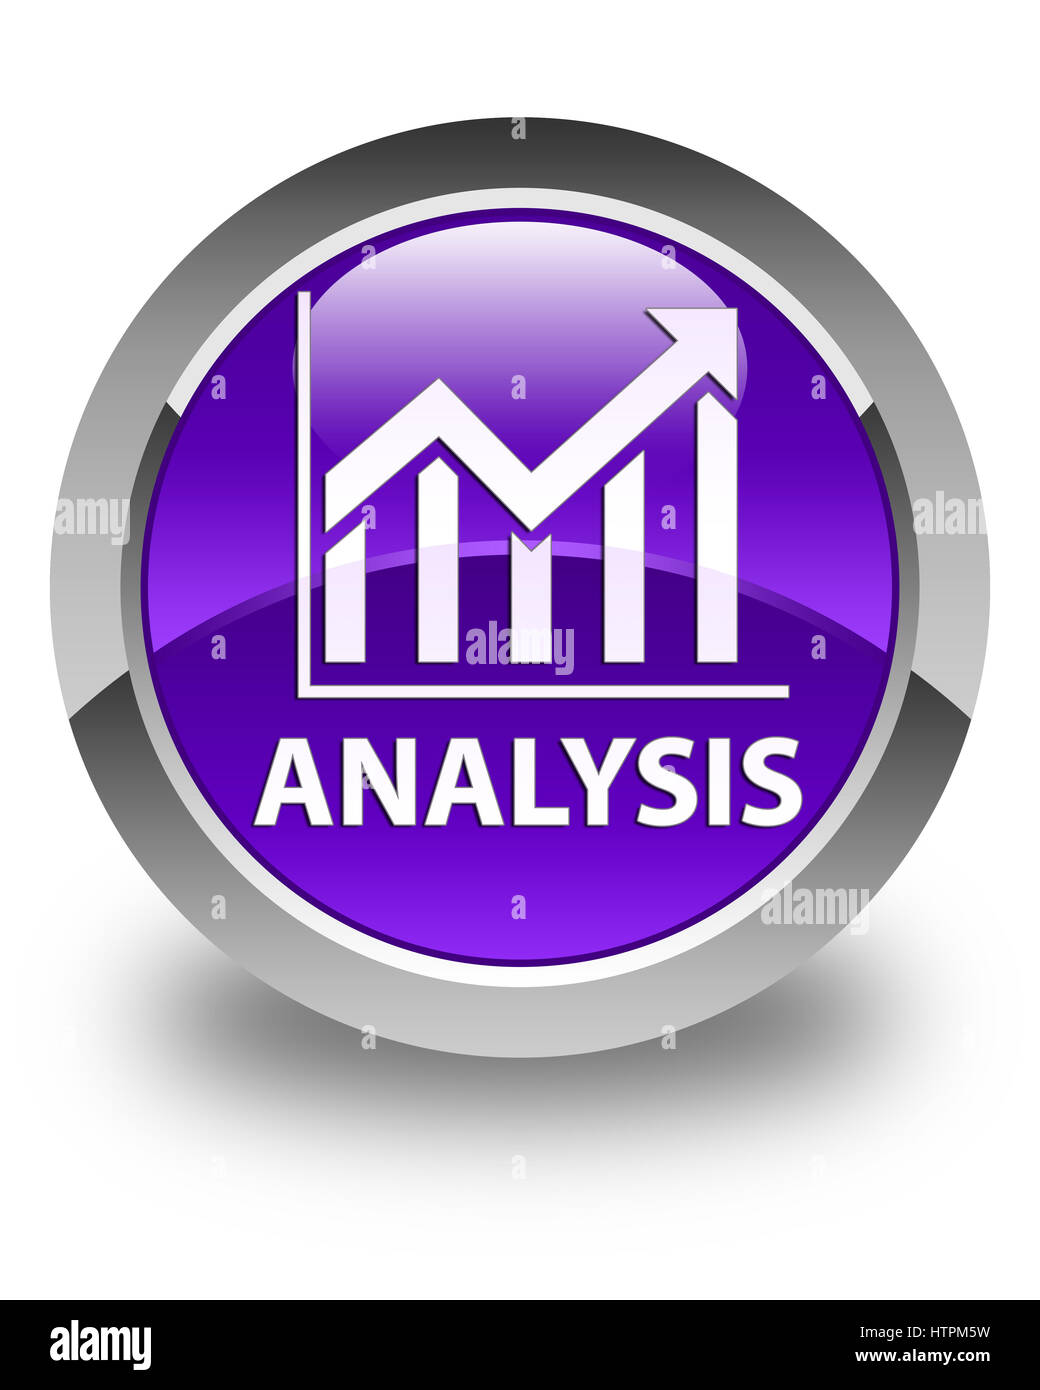 (Analyse statistique) isolé sur l'icône bouton rond violet brillant abstract illustration Banque D'Images